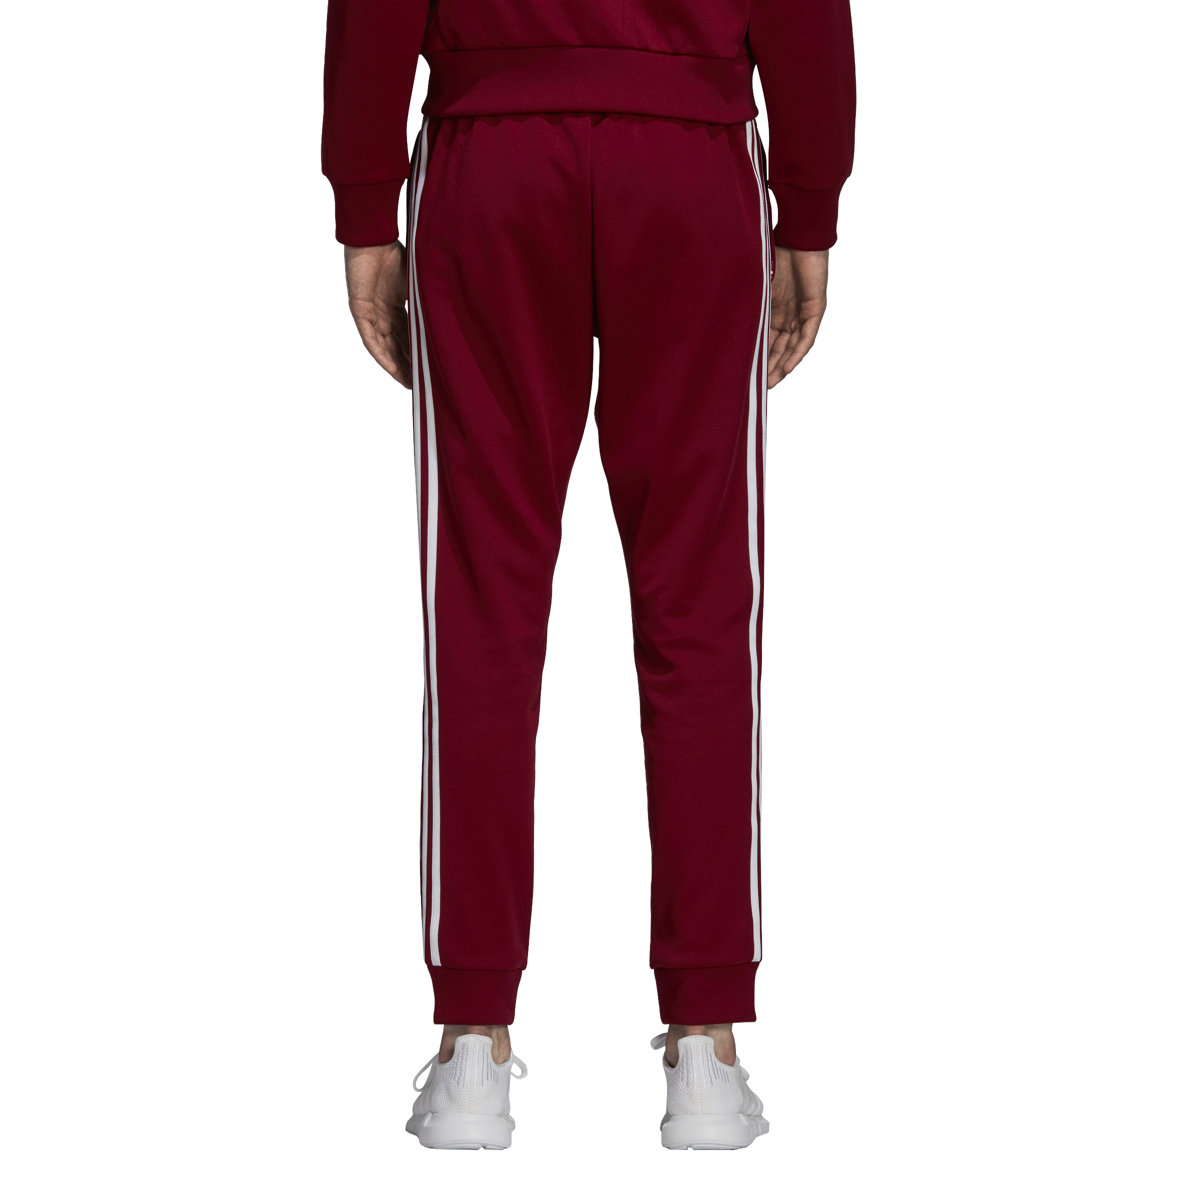 Adidas Men's Originals SST Track Pants Collegiate Burgundy DU1348 | eBay